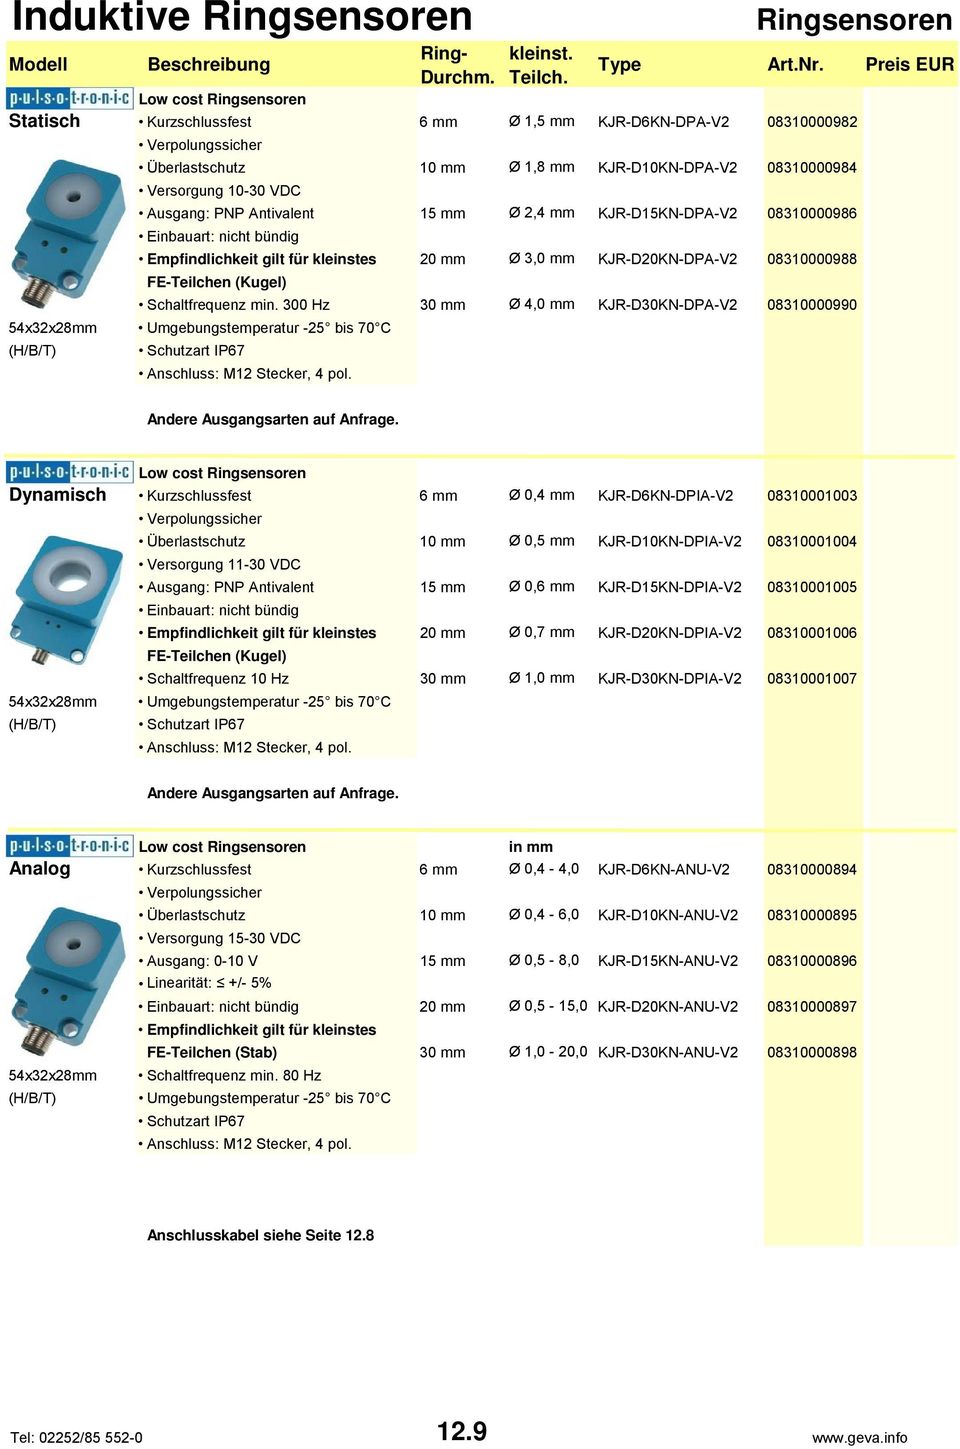 2,4 mm KJR-D15KN-DPA-V2 08310000986 Einbauart: nicht bündig Empfindlichkeit gilt für kleinstes 20 mm Ø 3,0 mm KJR-D20KN-DPA-V2 08310000988 FE-Teilchen (Kugel) Schaltfrequenz min.